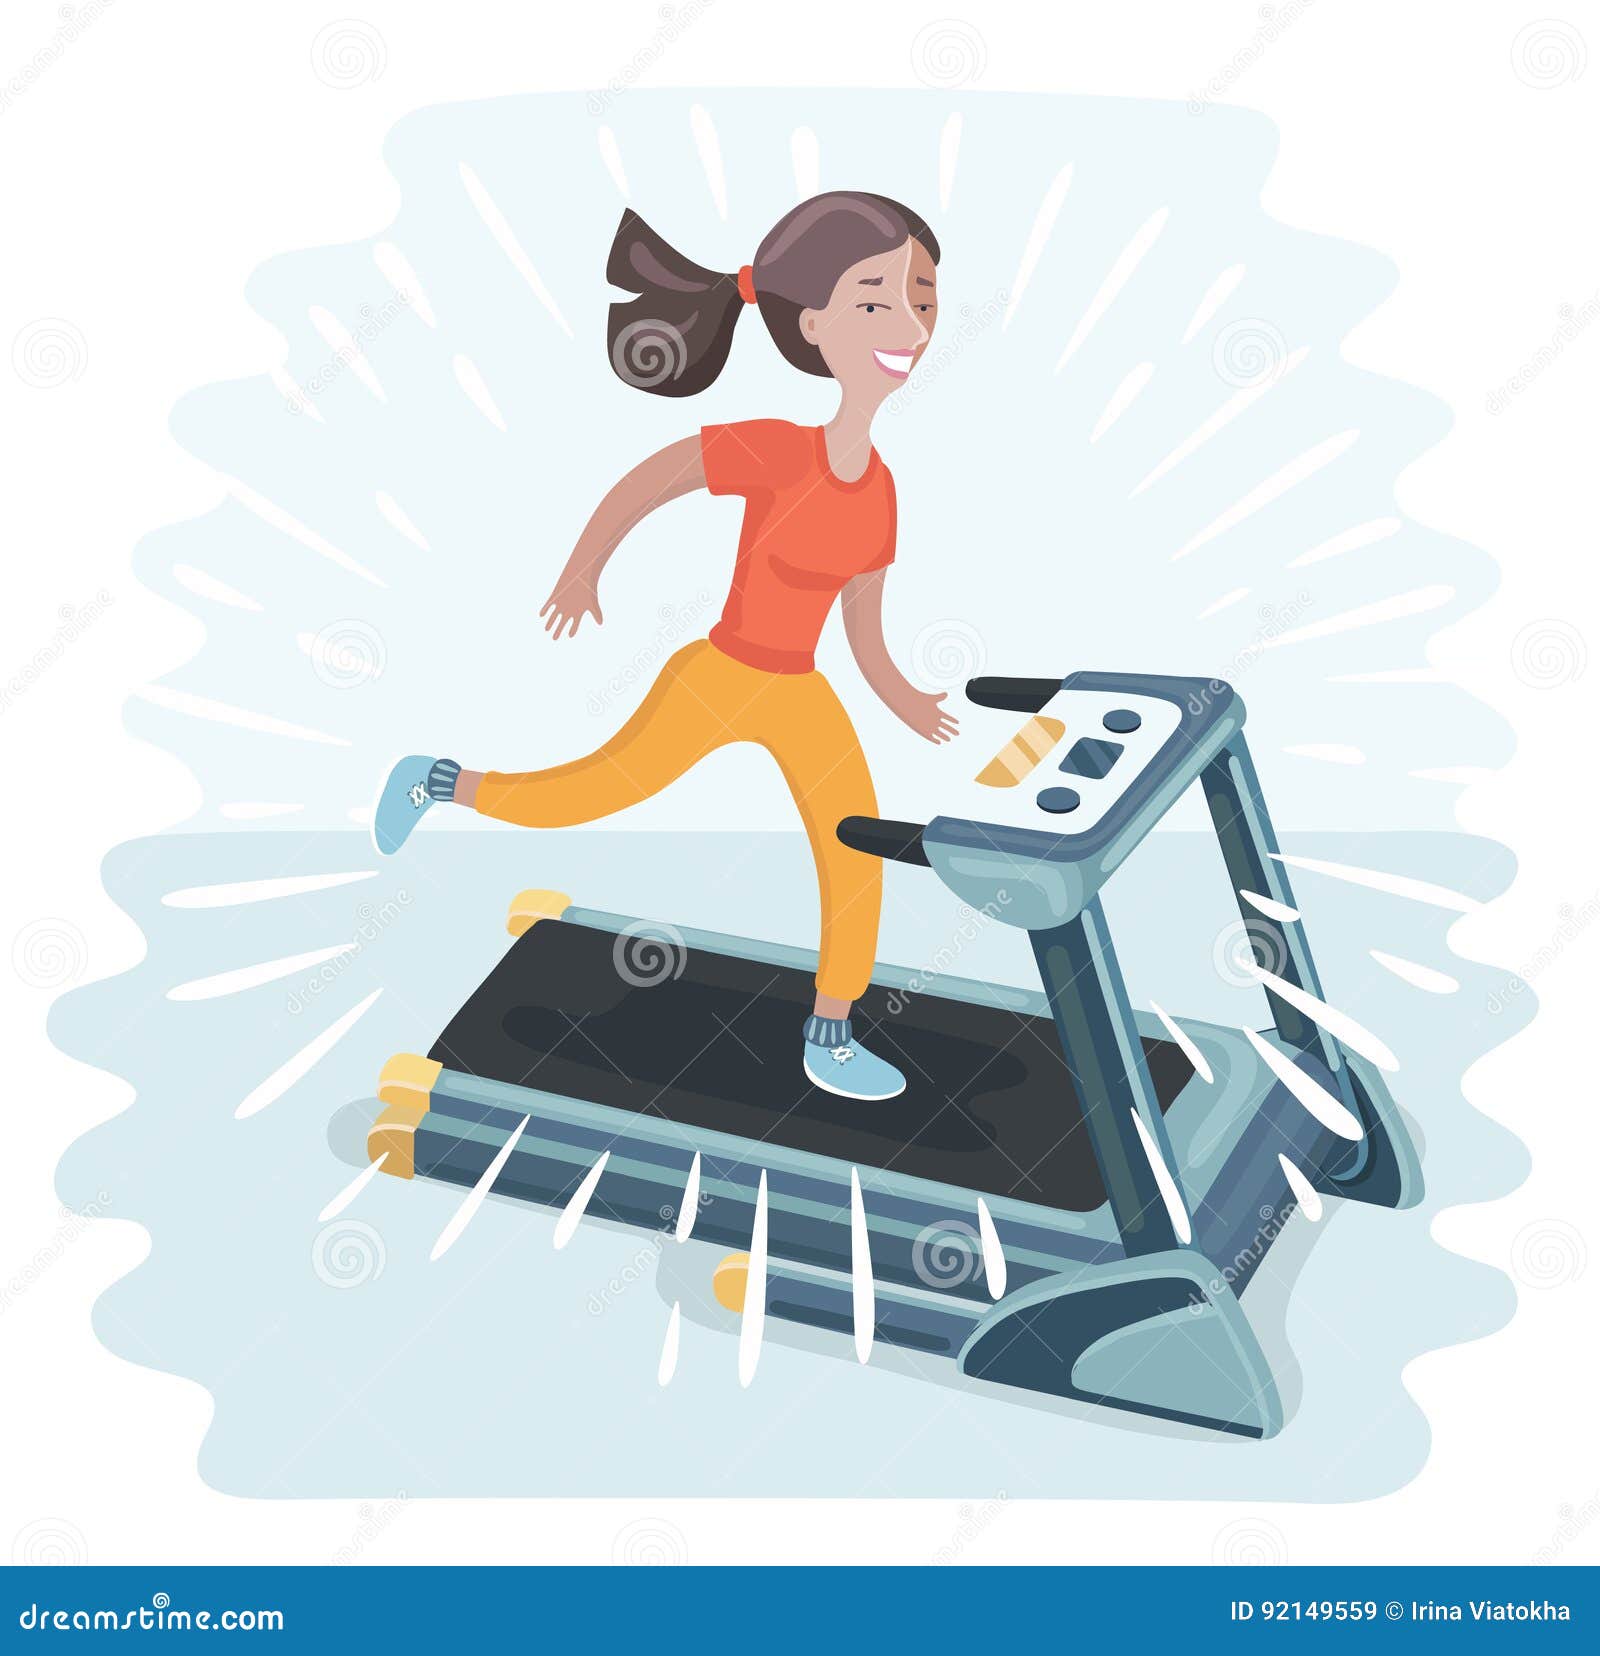 Illustration of woman running on a treadmill stock vector